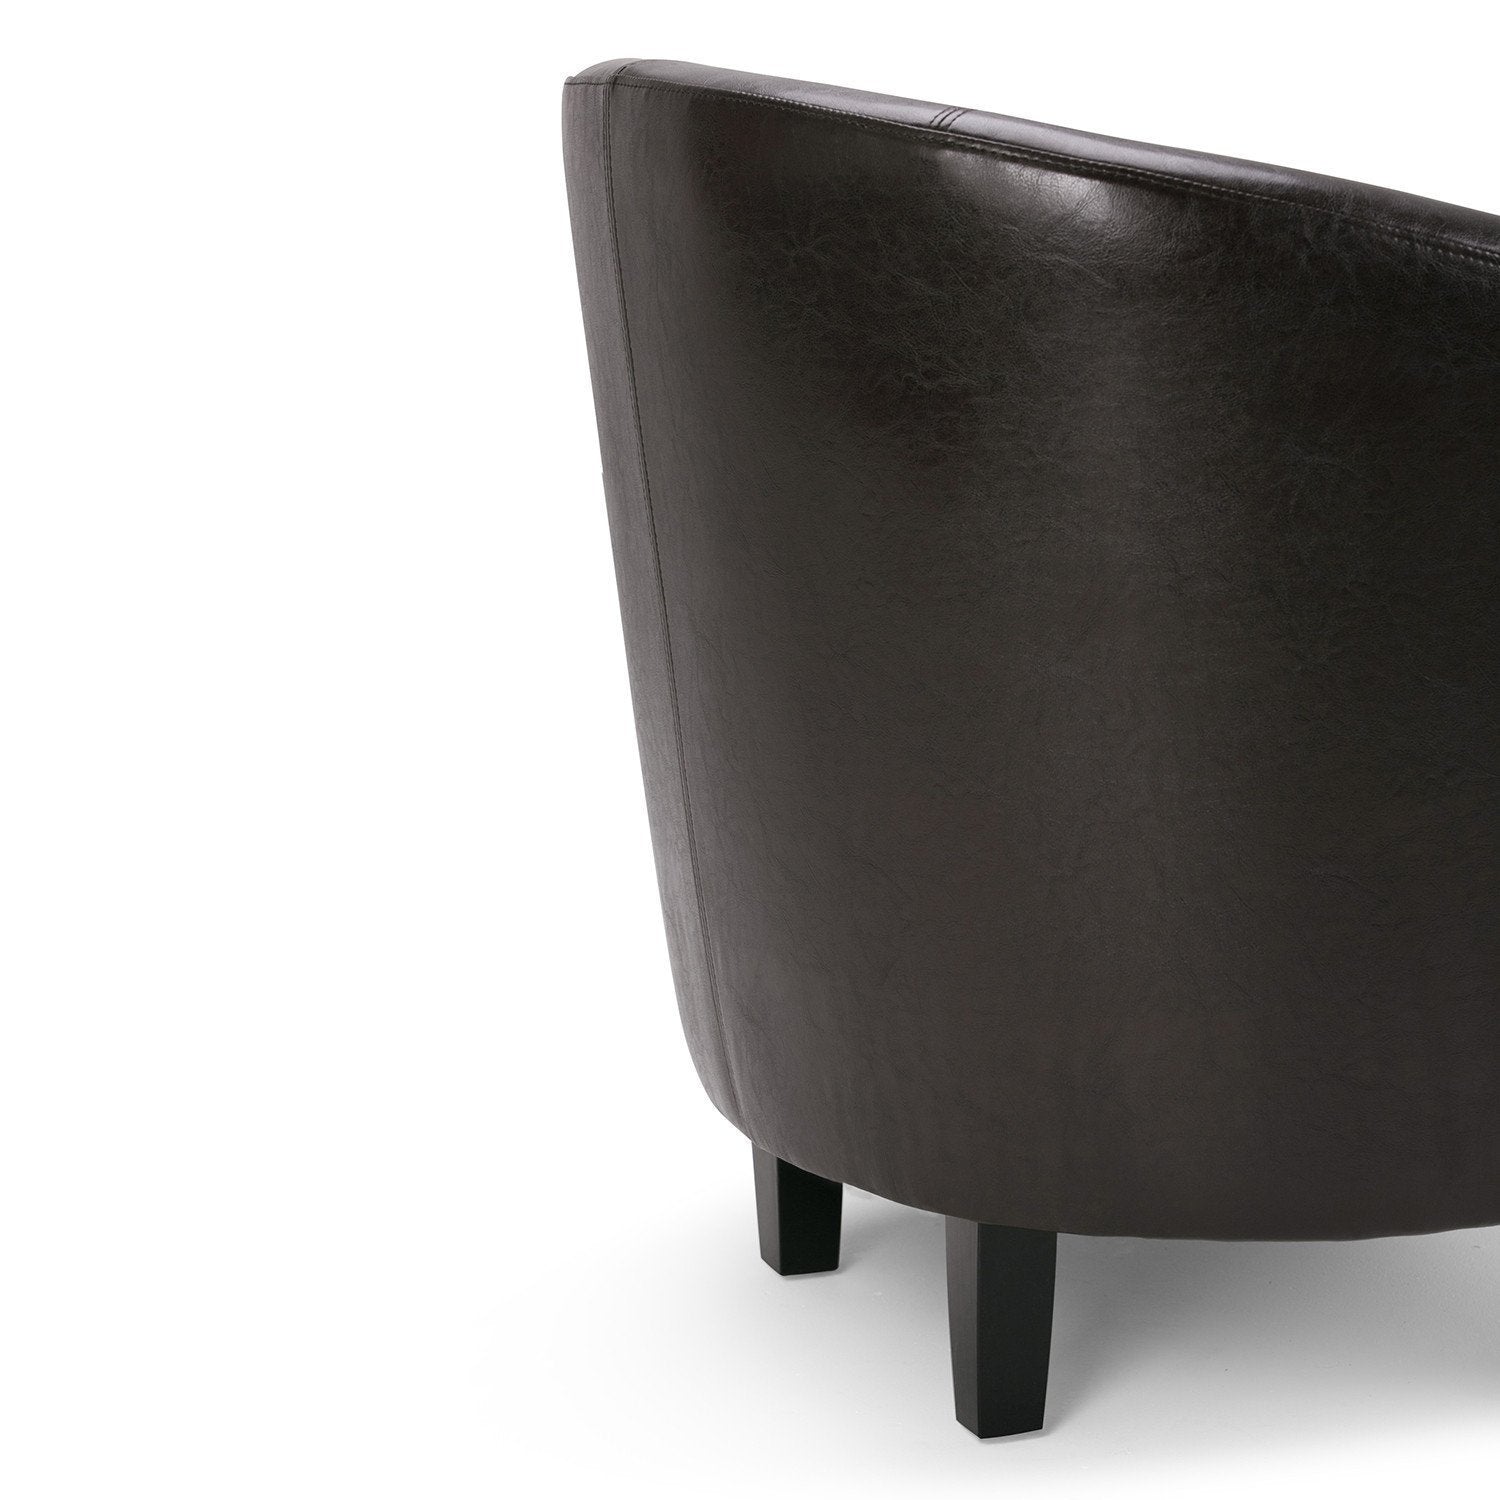 Dark Brown Vegan Leather | Austin Vegan Leather Tub Chair